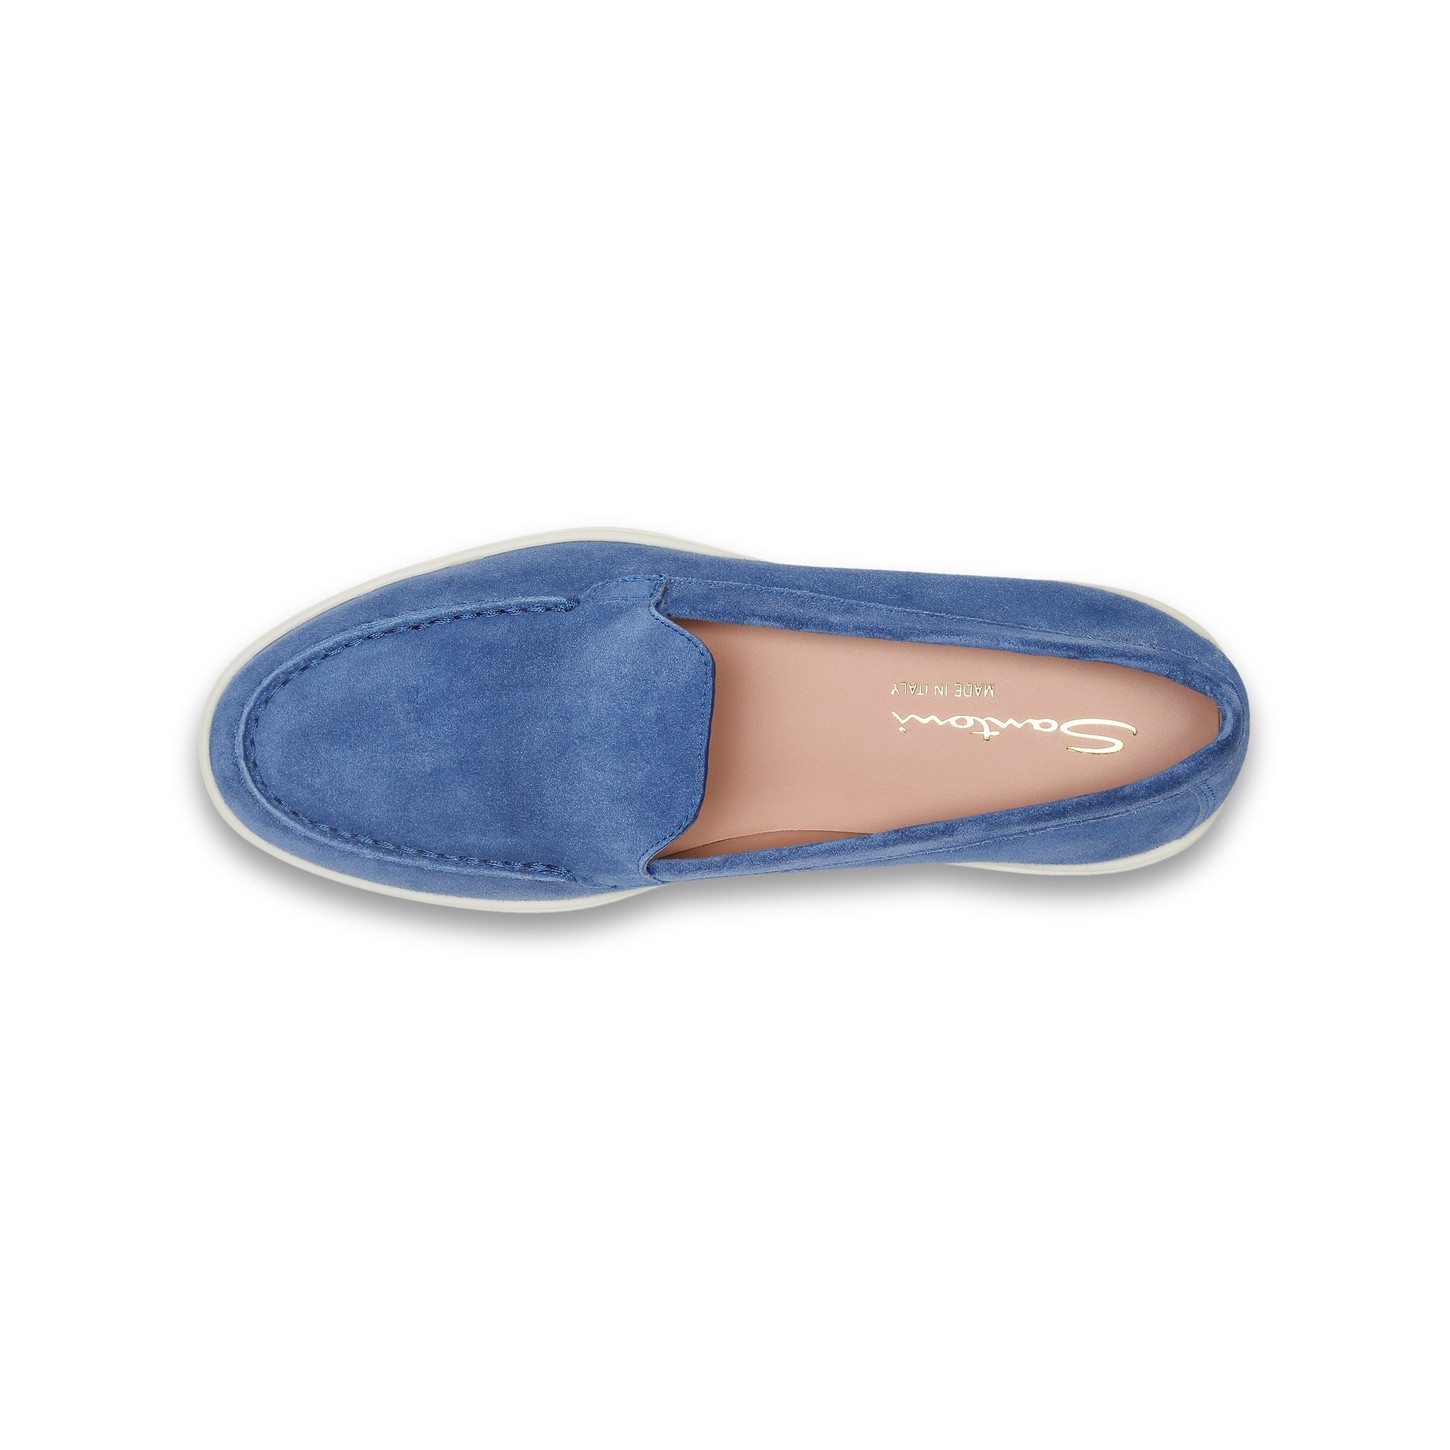 Women's blue suede loafer - 5